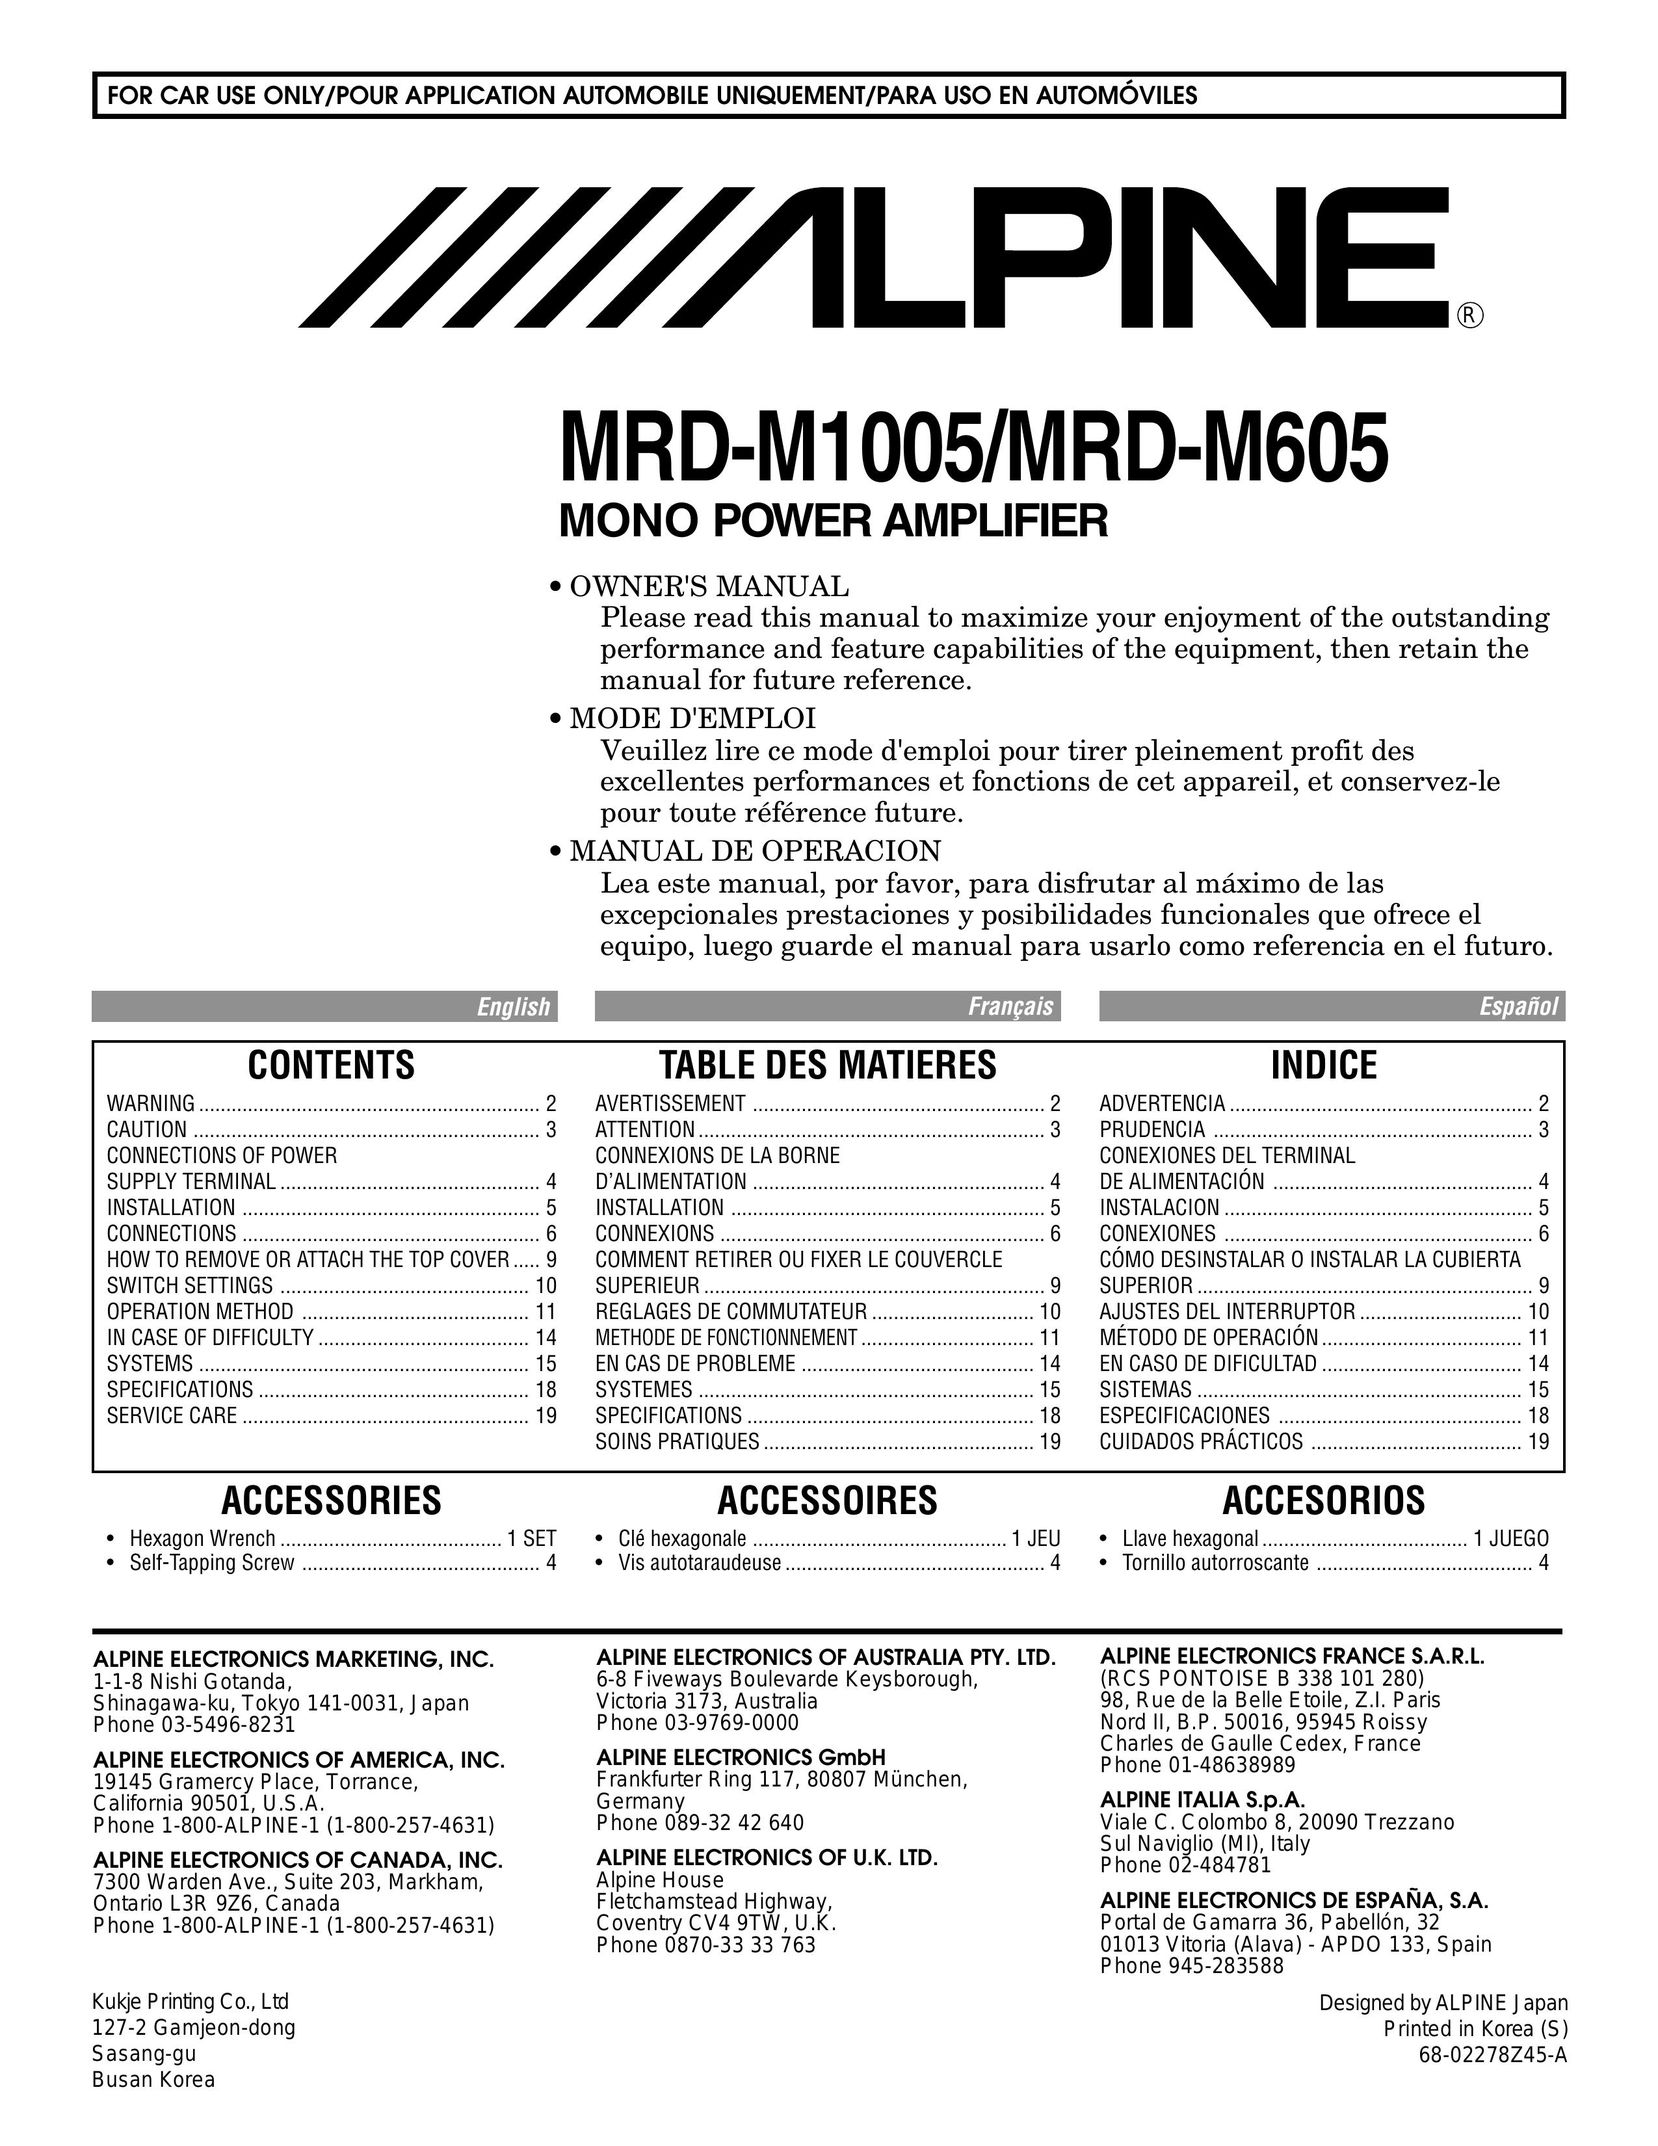 Alpine MRD-M1005 Stereo Amplifier User Manual